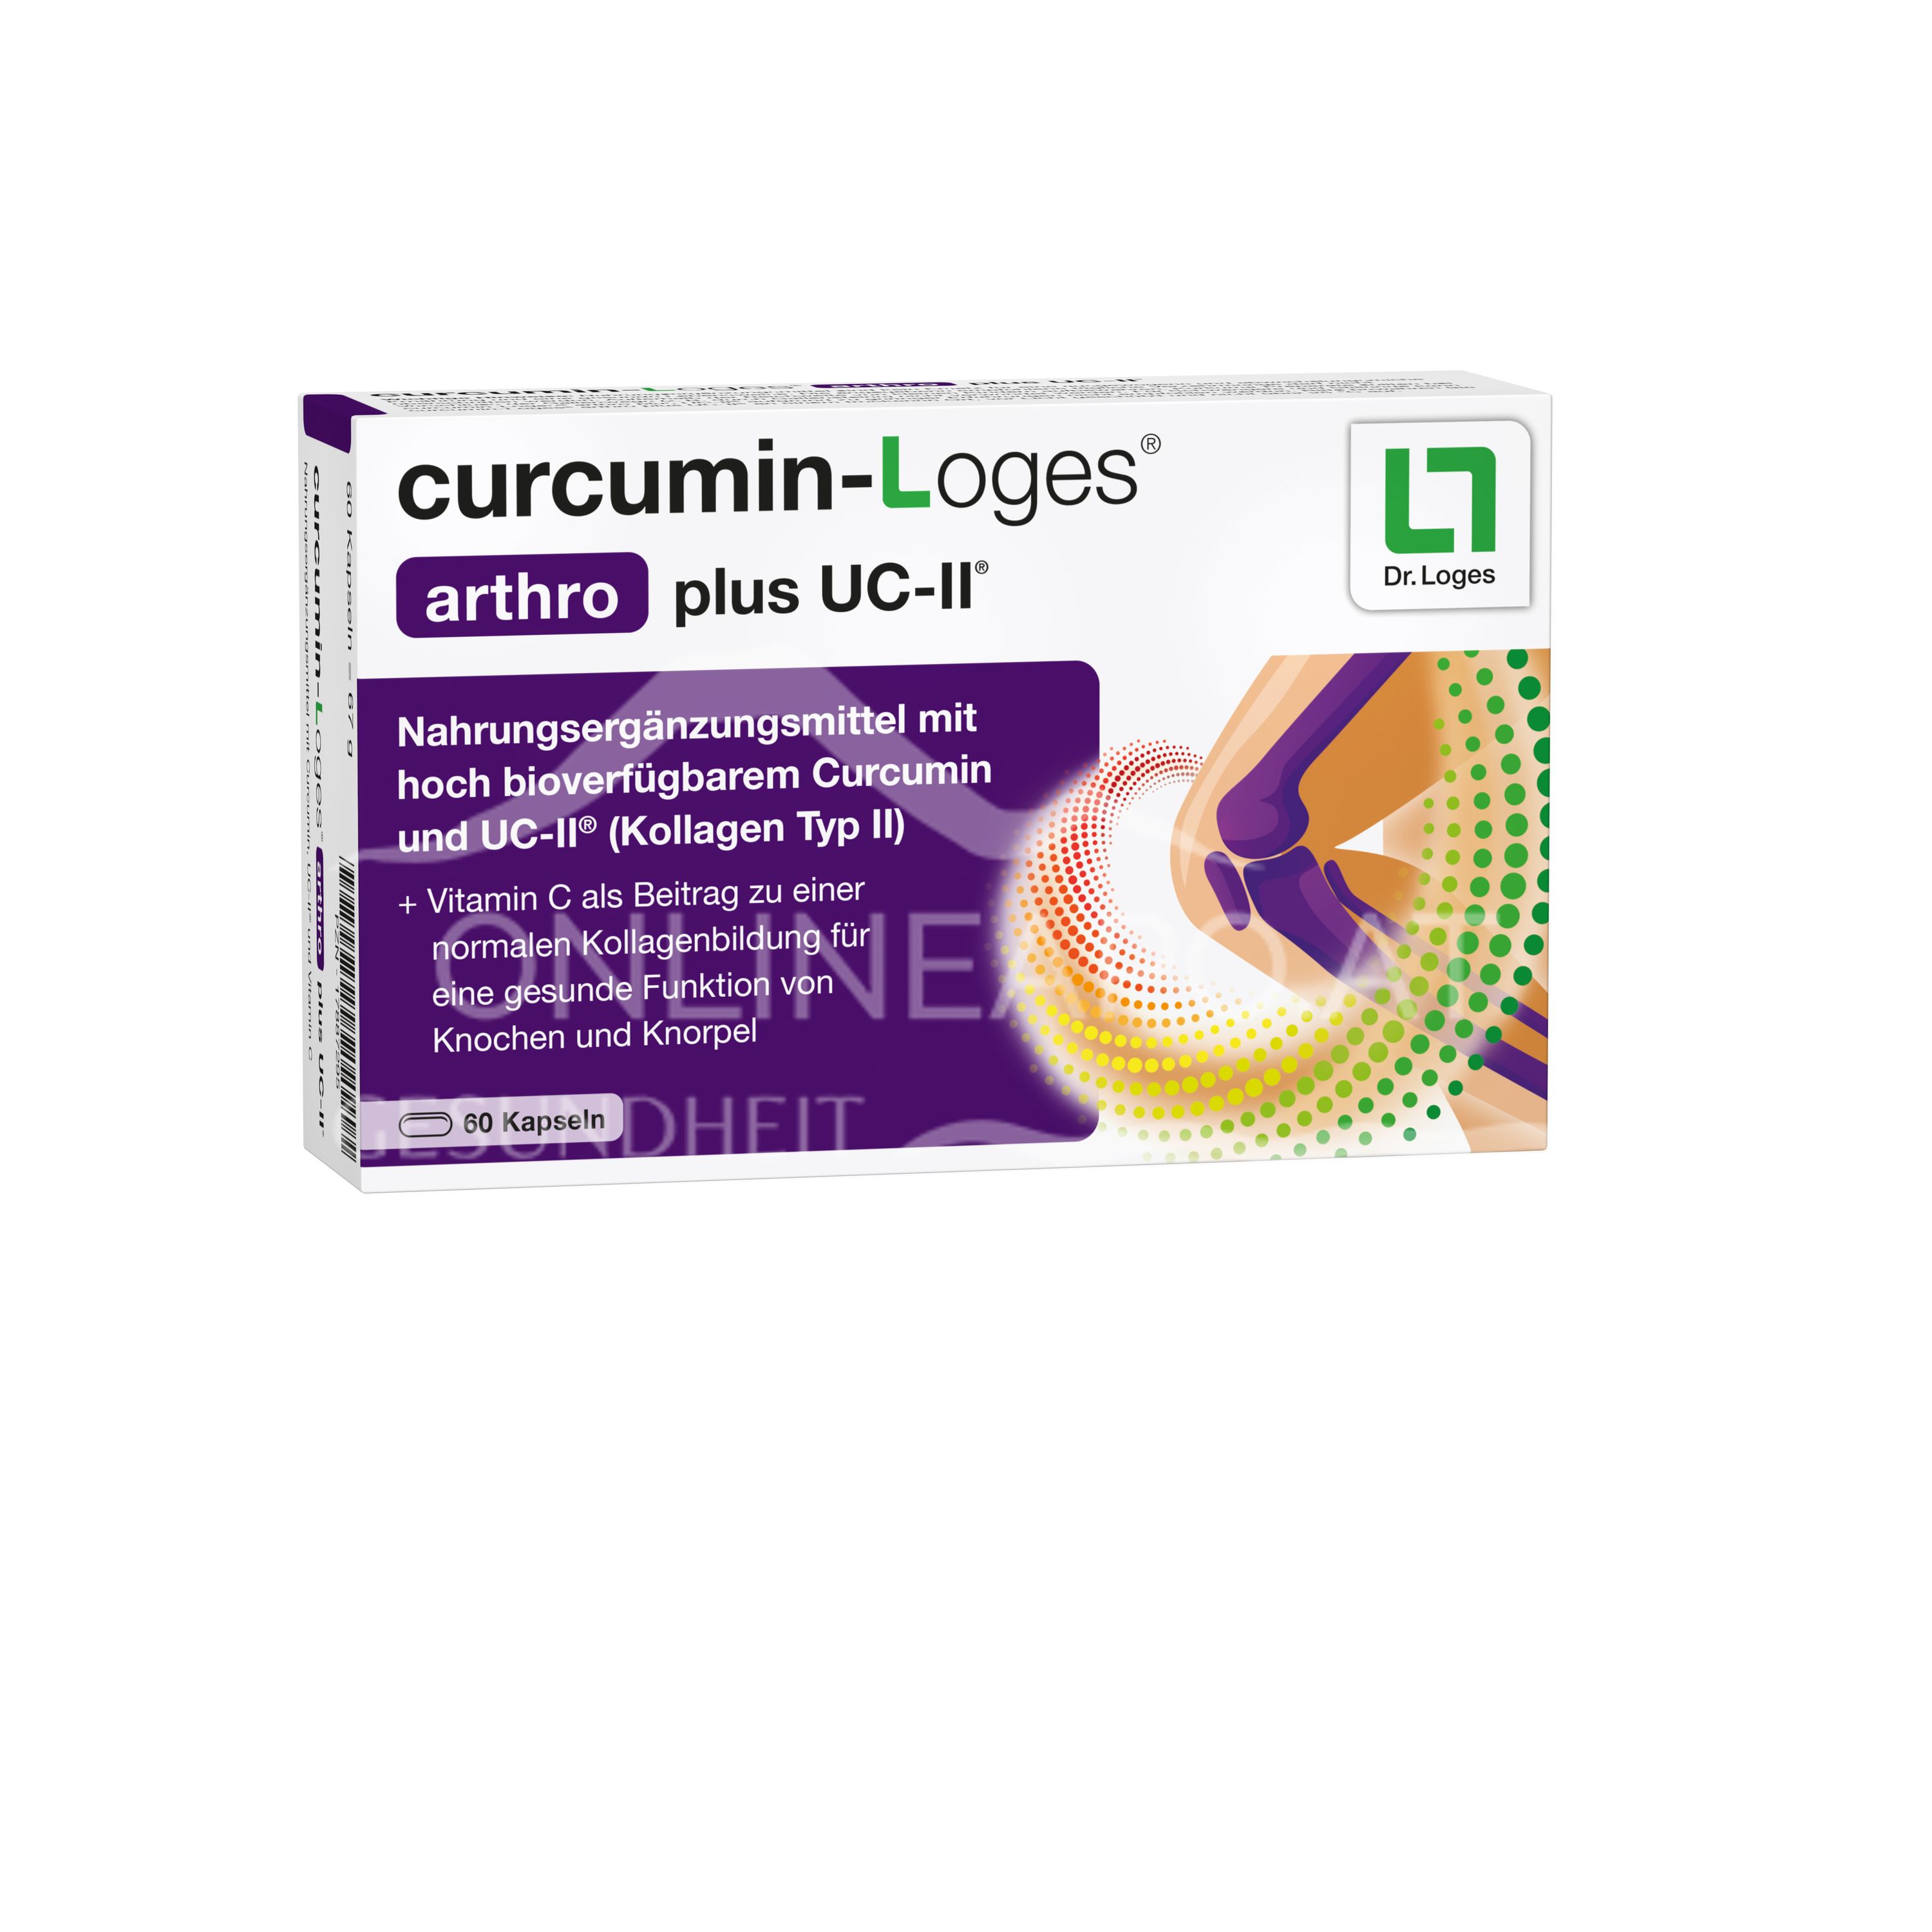 curcumin-Loges® arthro plus UC-II® Kapseln